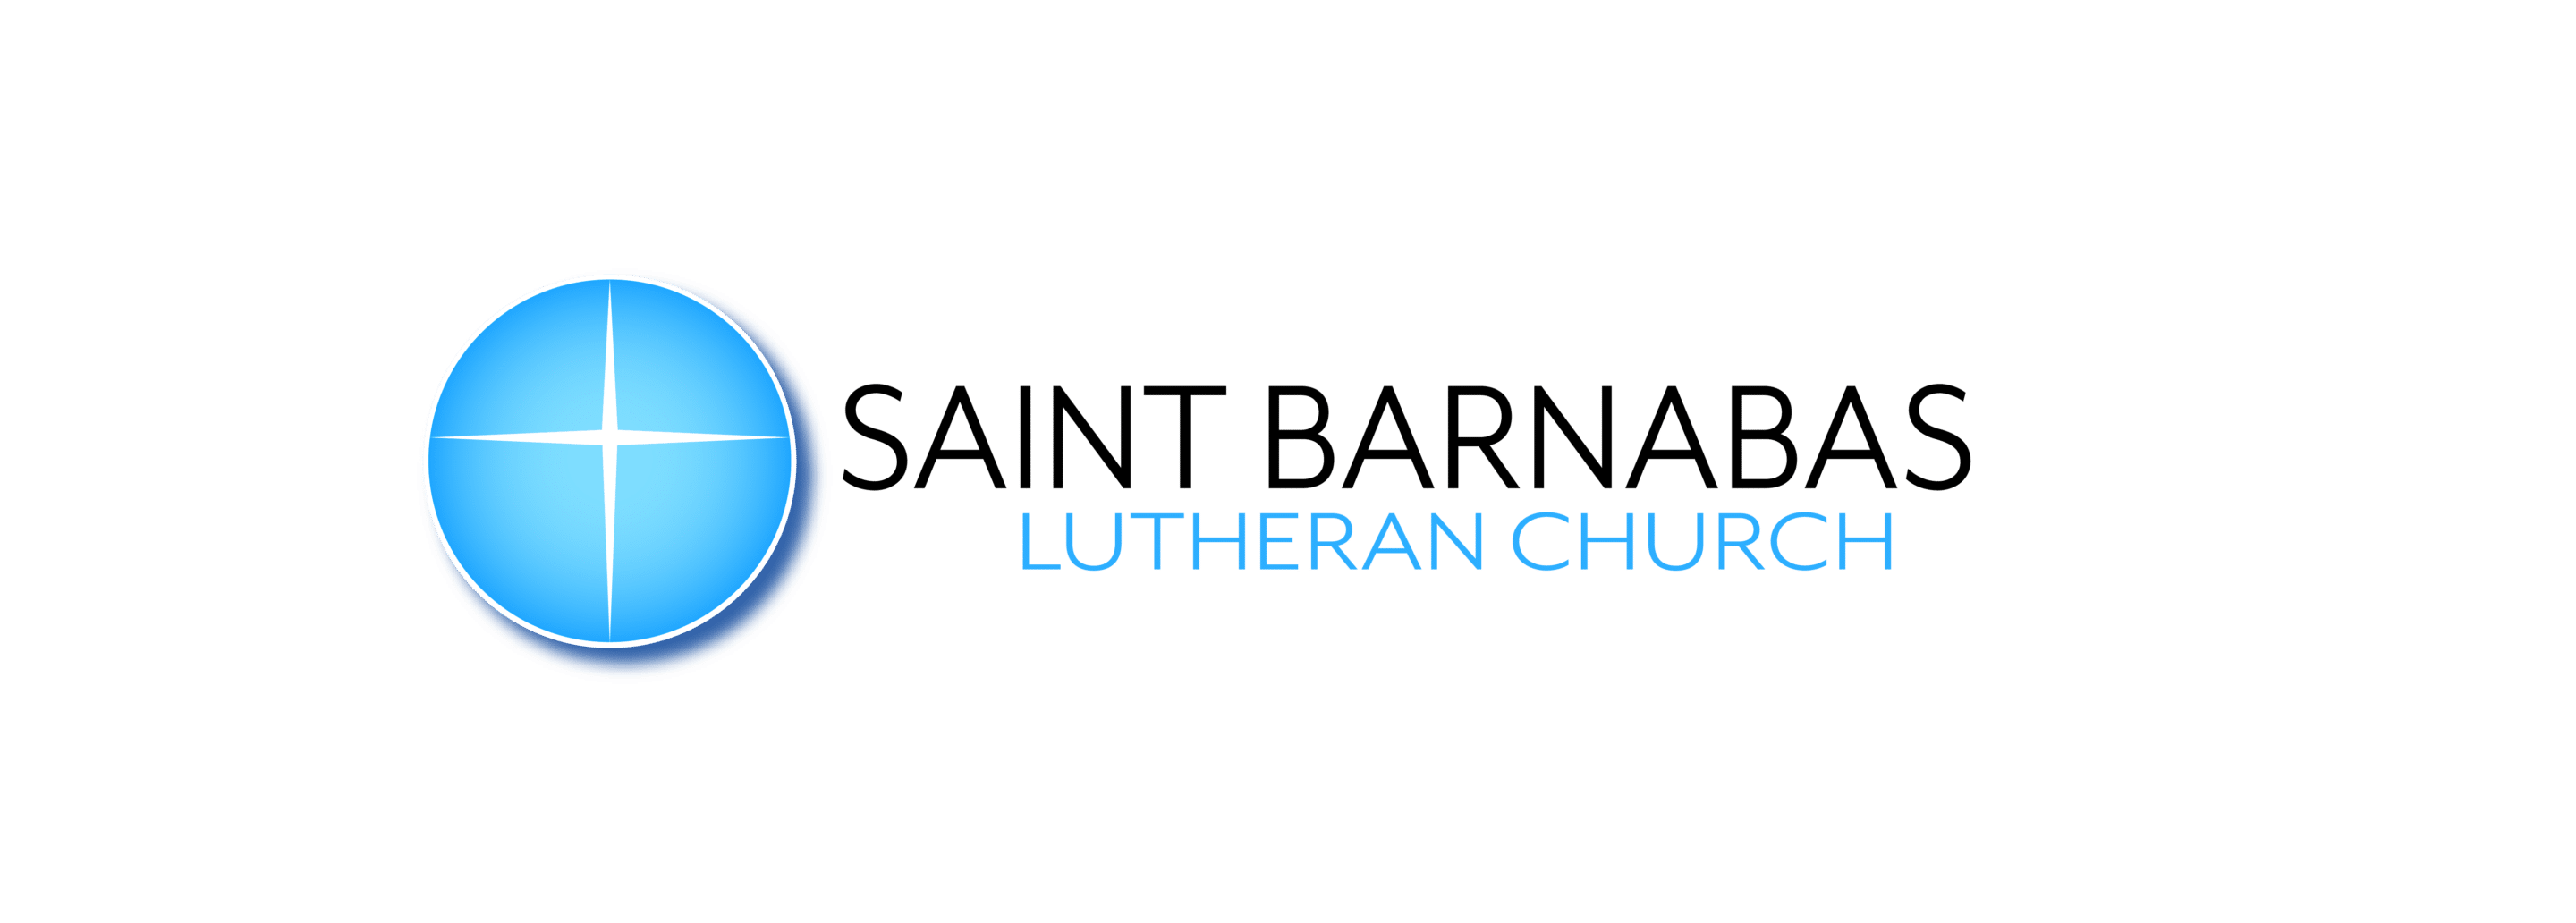 St Barnabas Lutheran Church